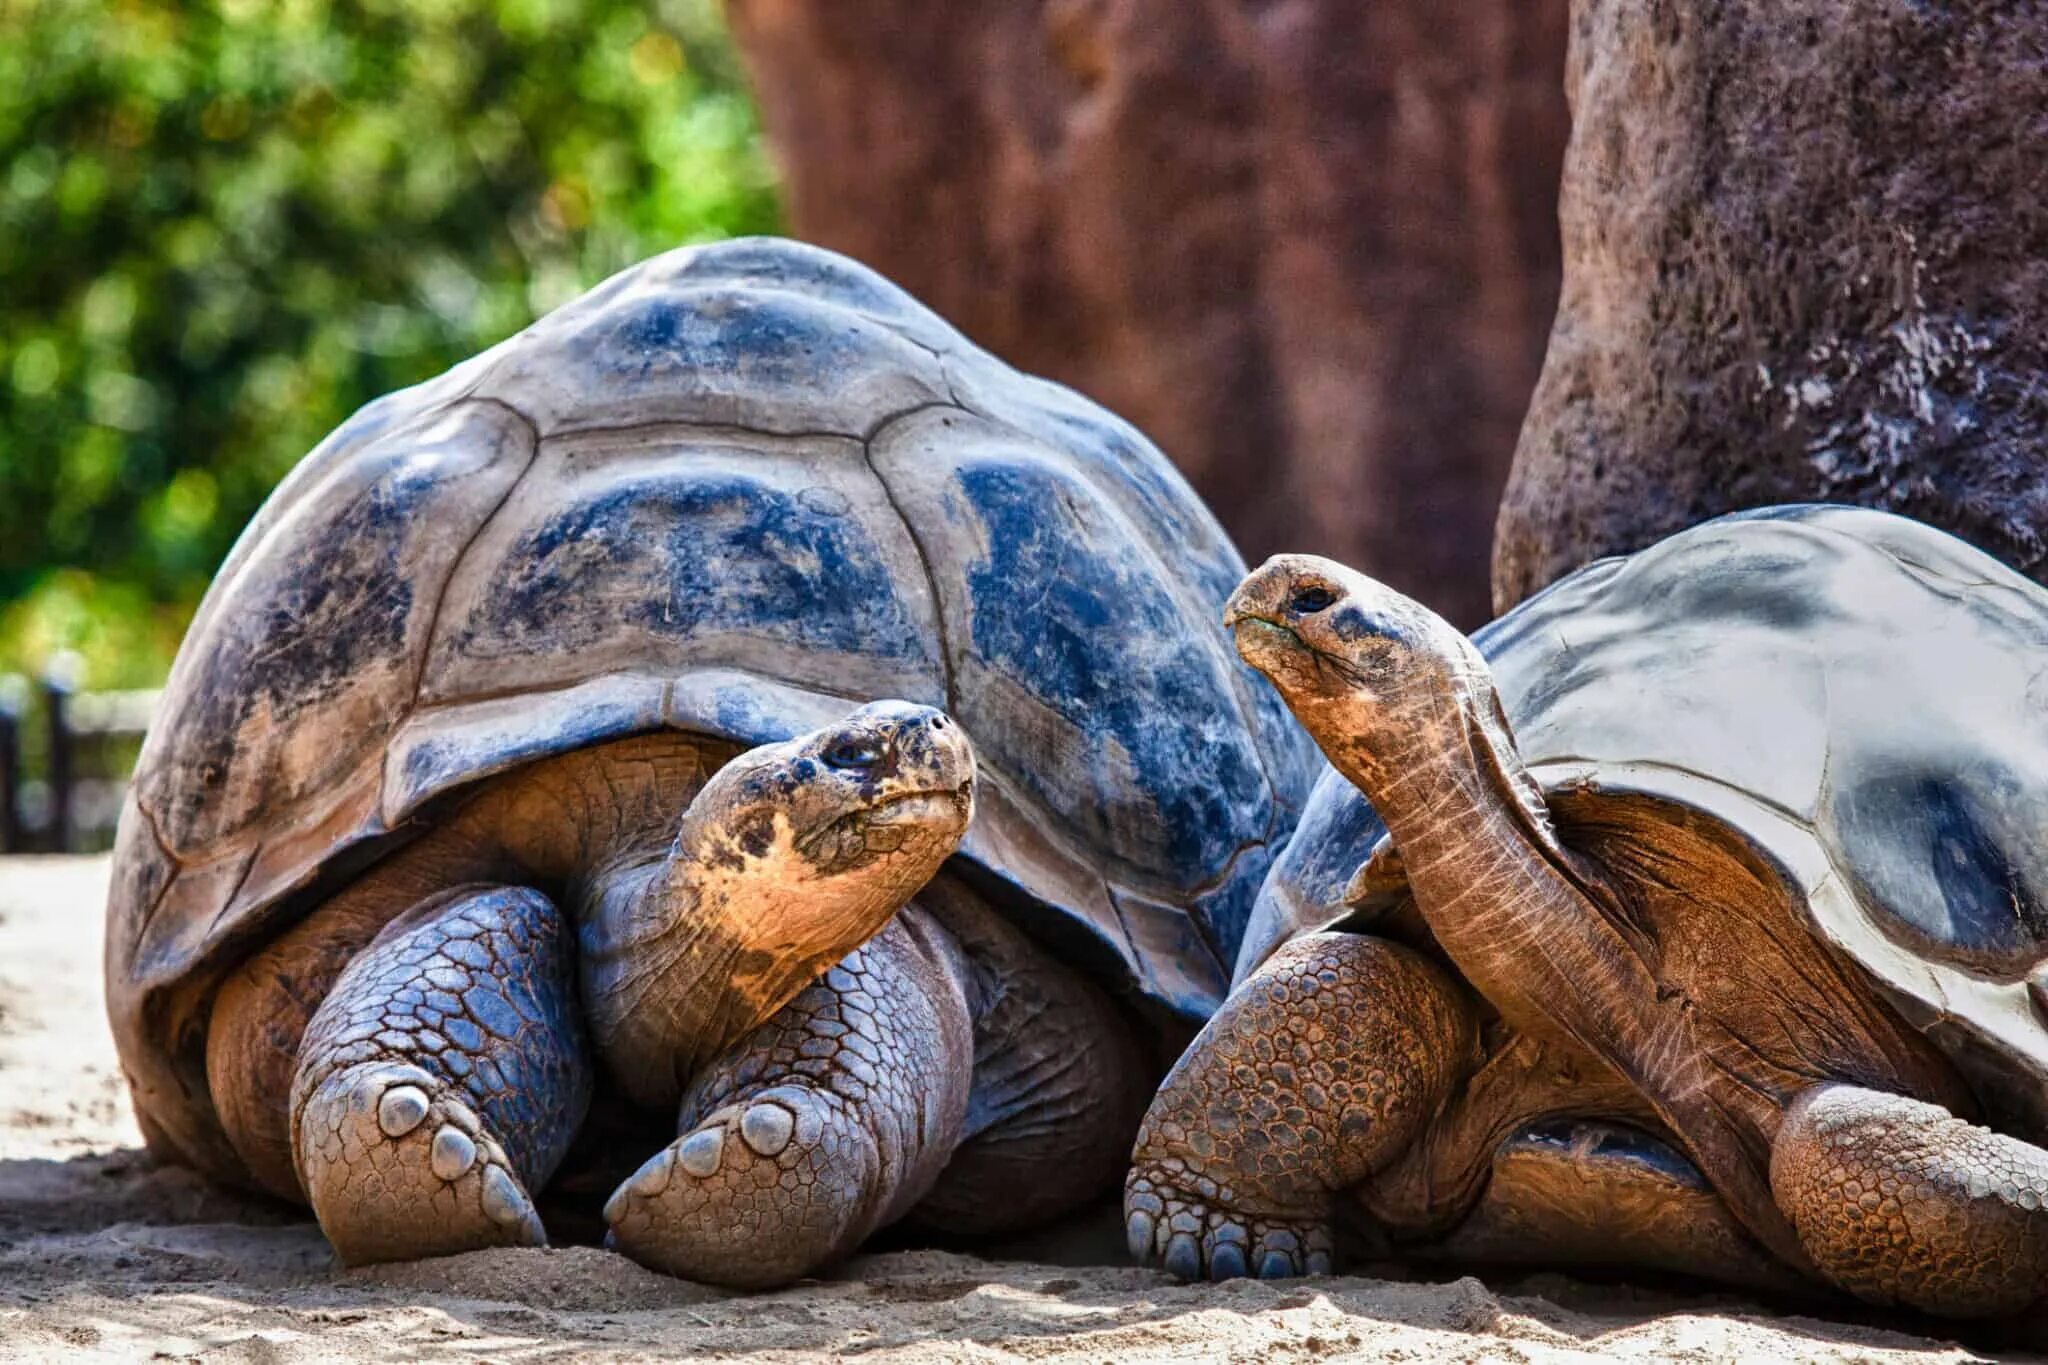 Галапагосская черепаха. 2 Черепахи. Черепахи обнимаются. Слоновая черепаха. Черепахи пара